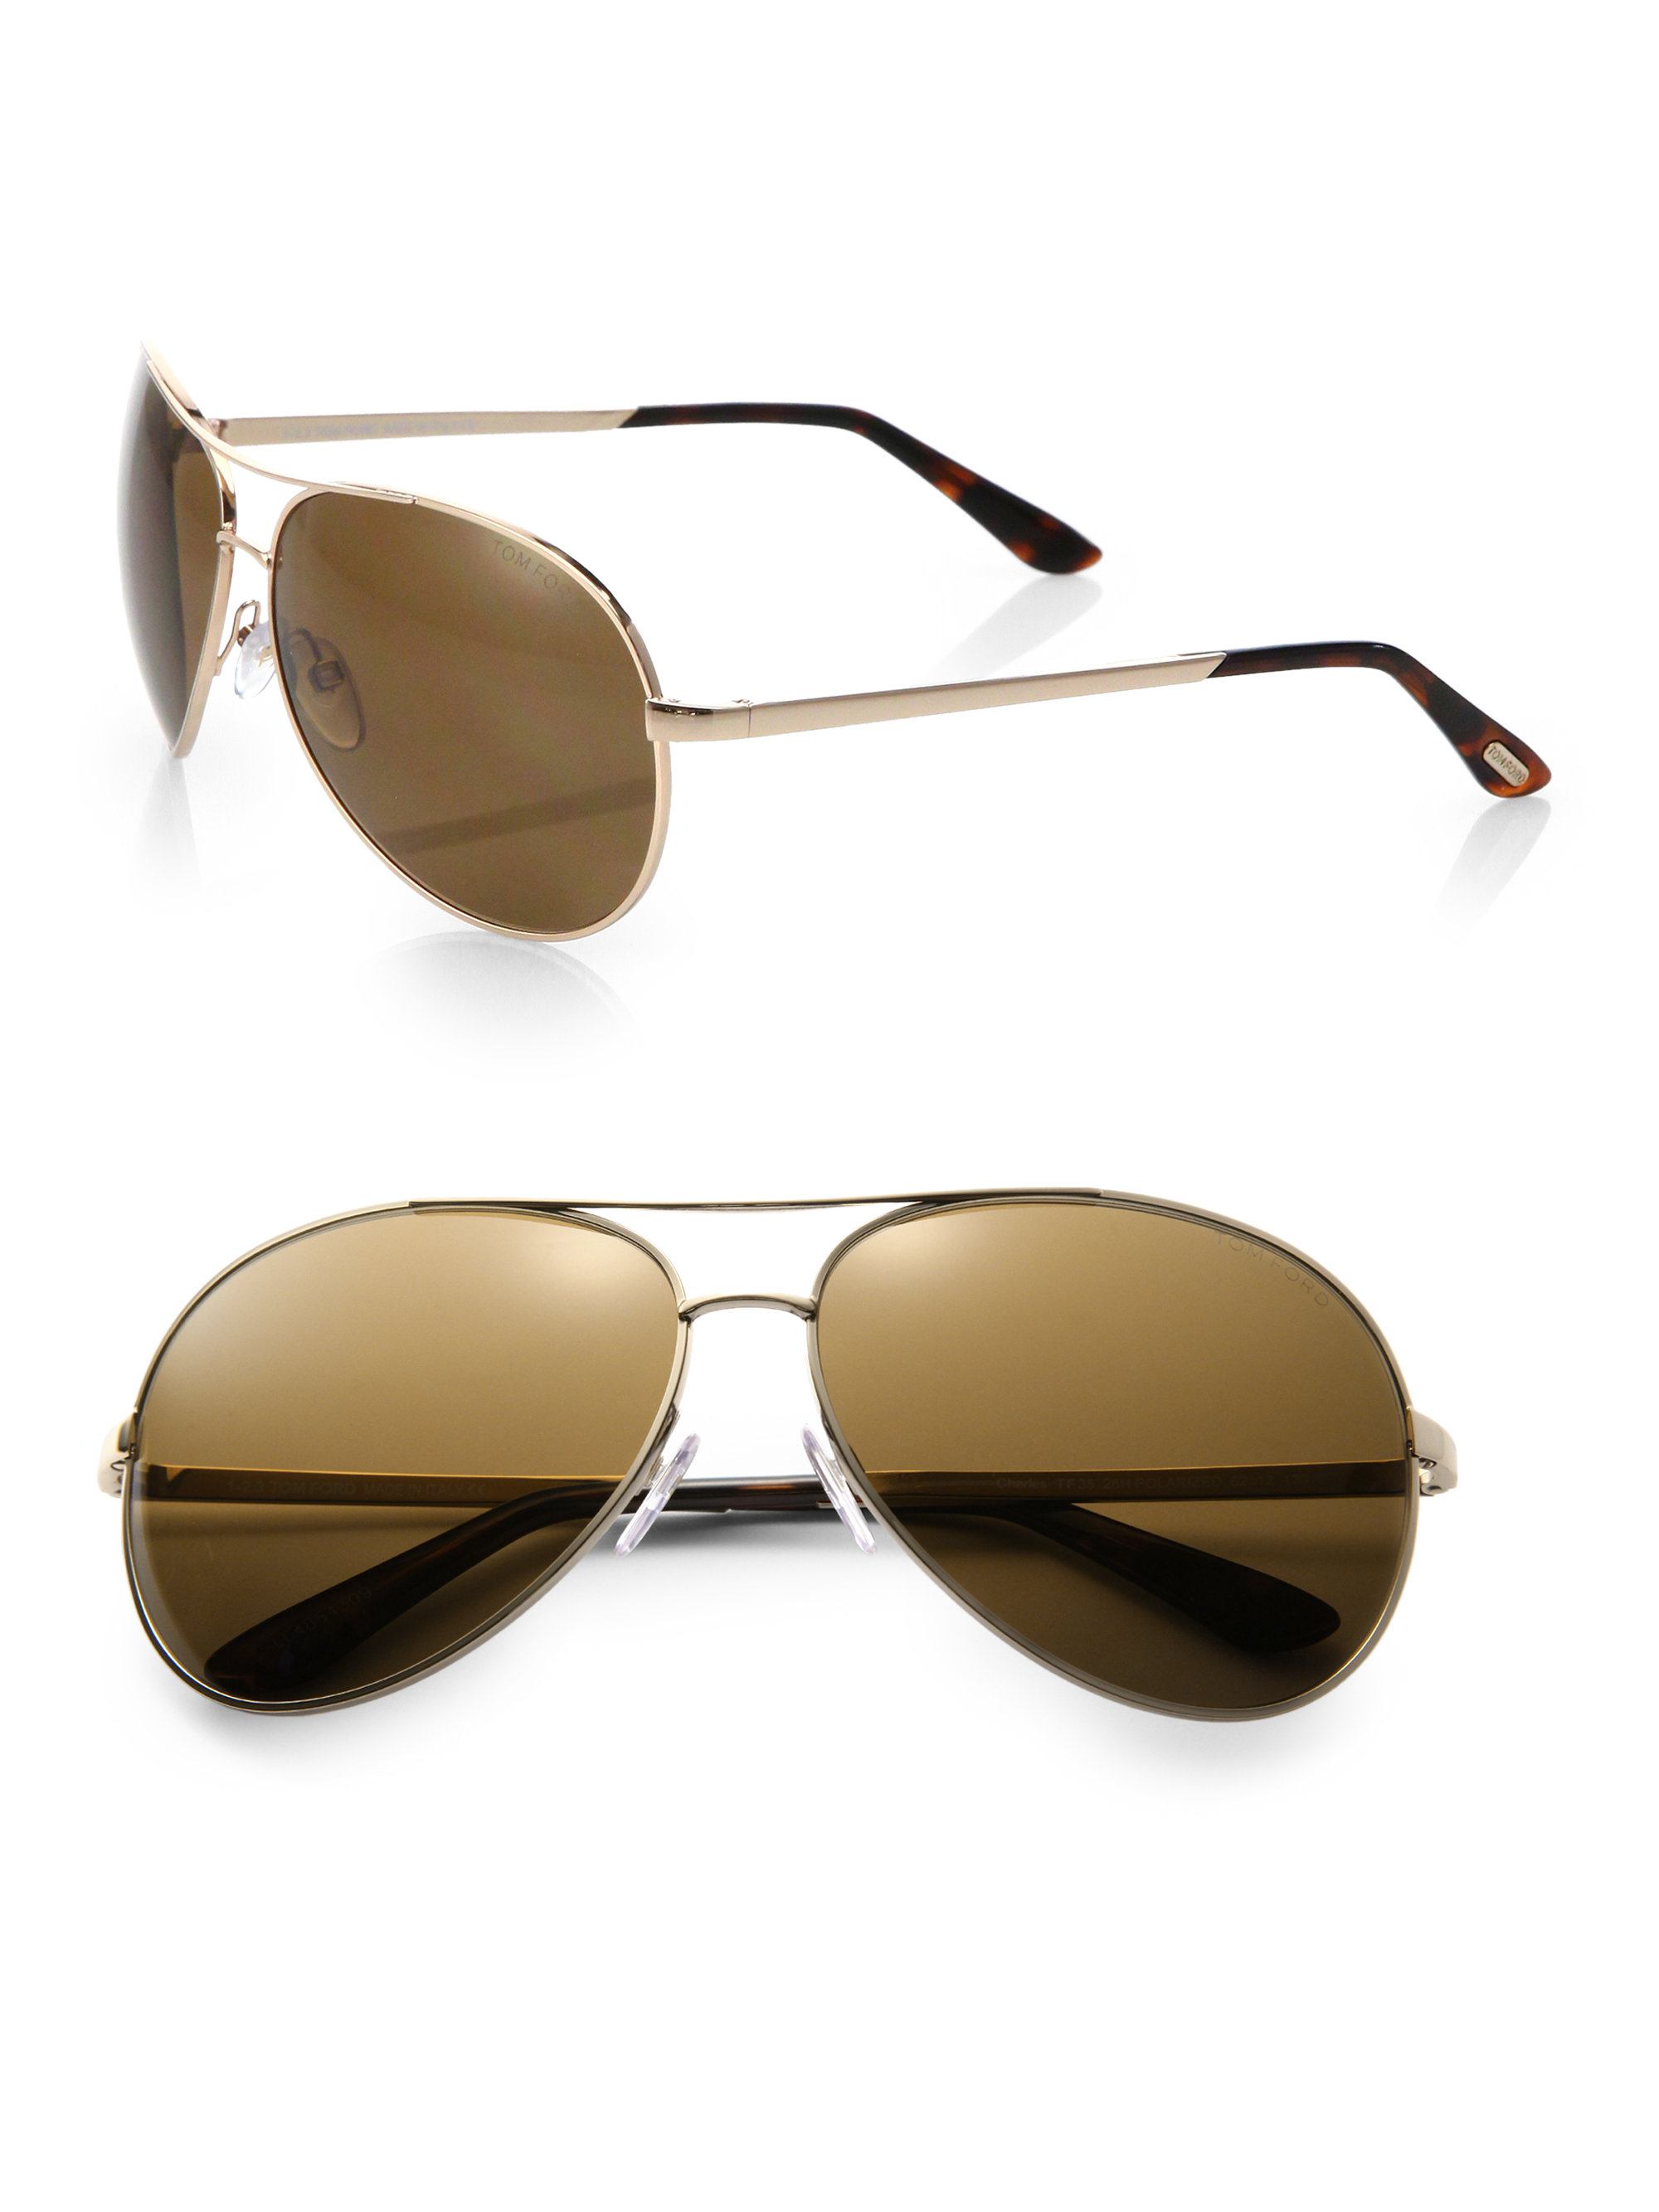 Lyst - Tom Ford Charles 62Mm Metal Aviator Sunglasses in Metallic for Men